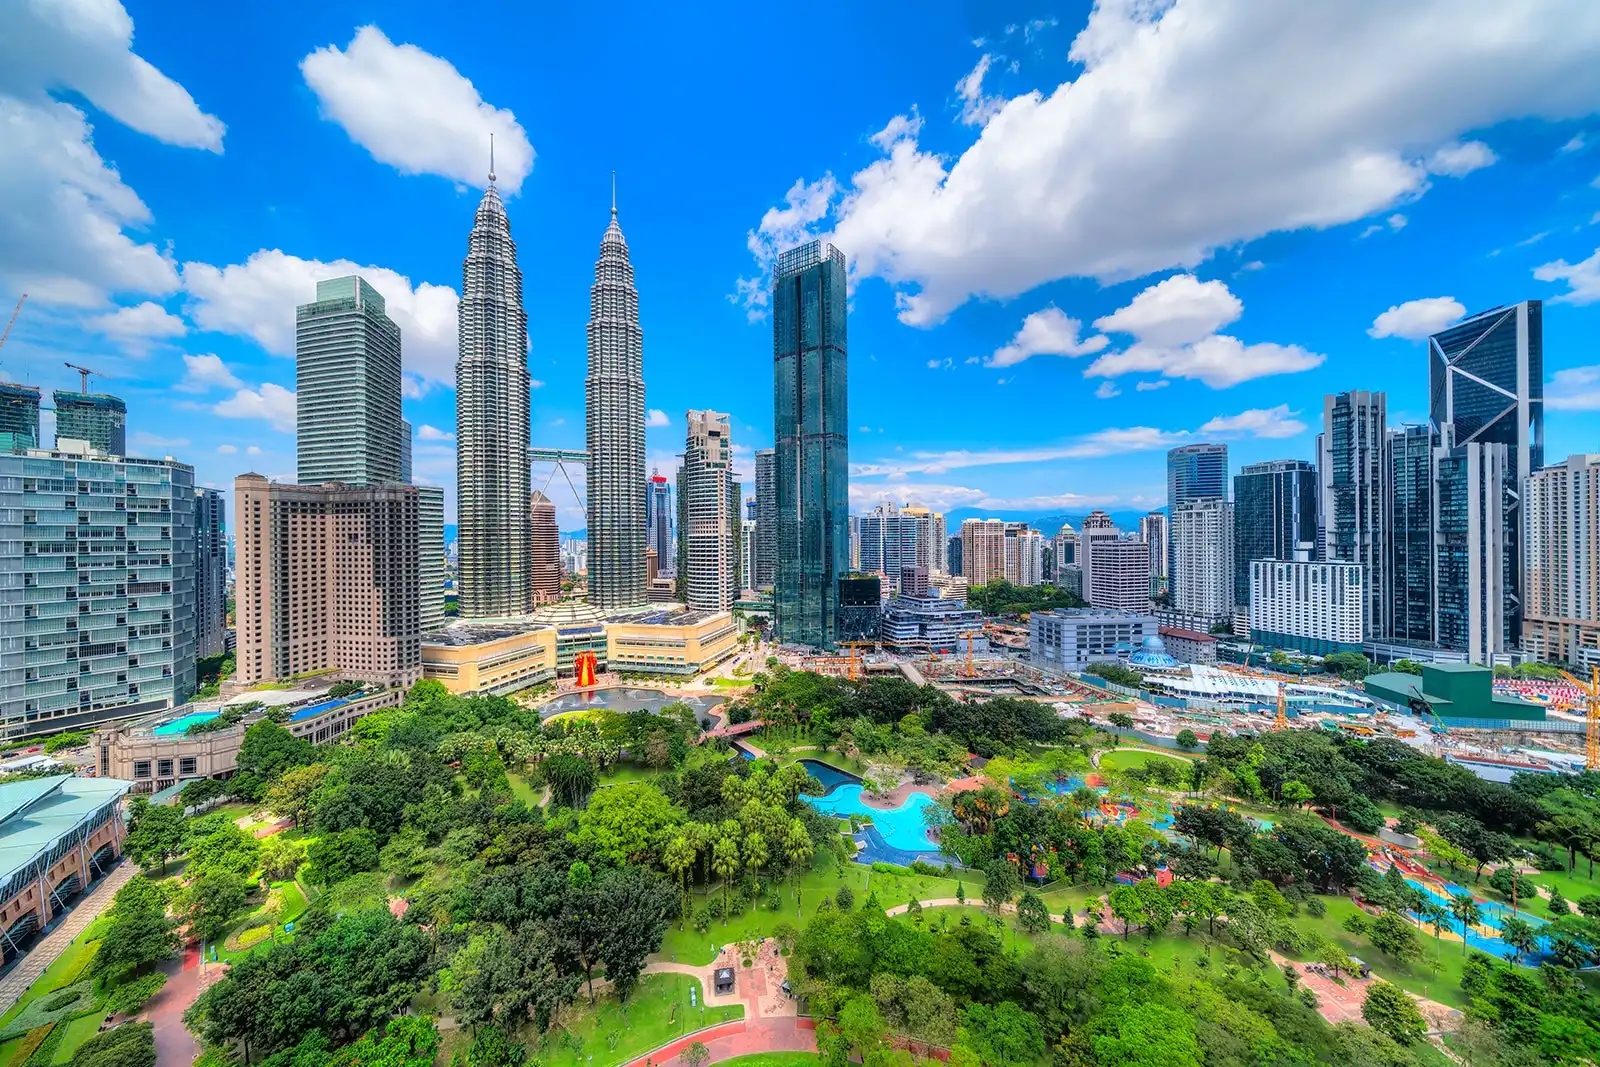 Malaysia, tourism market will outperform